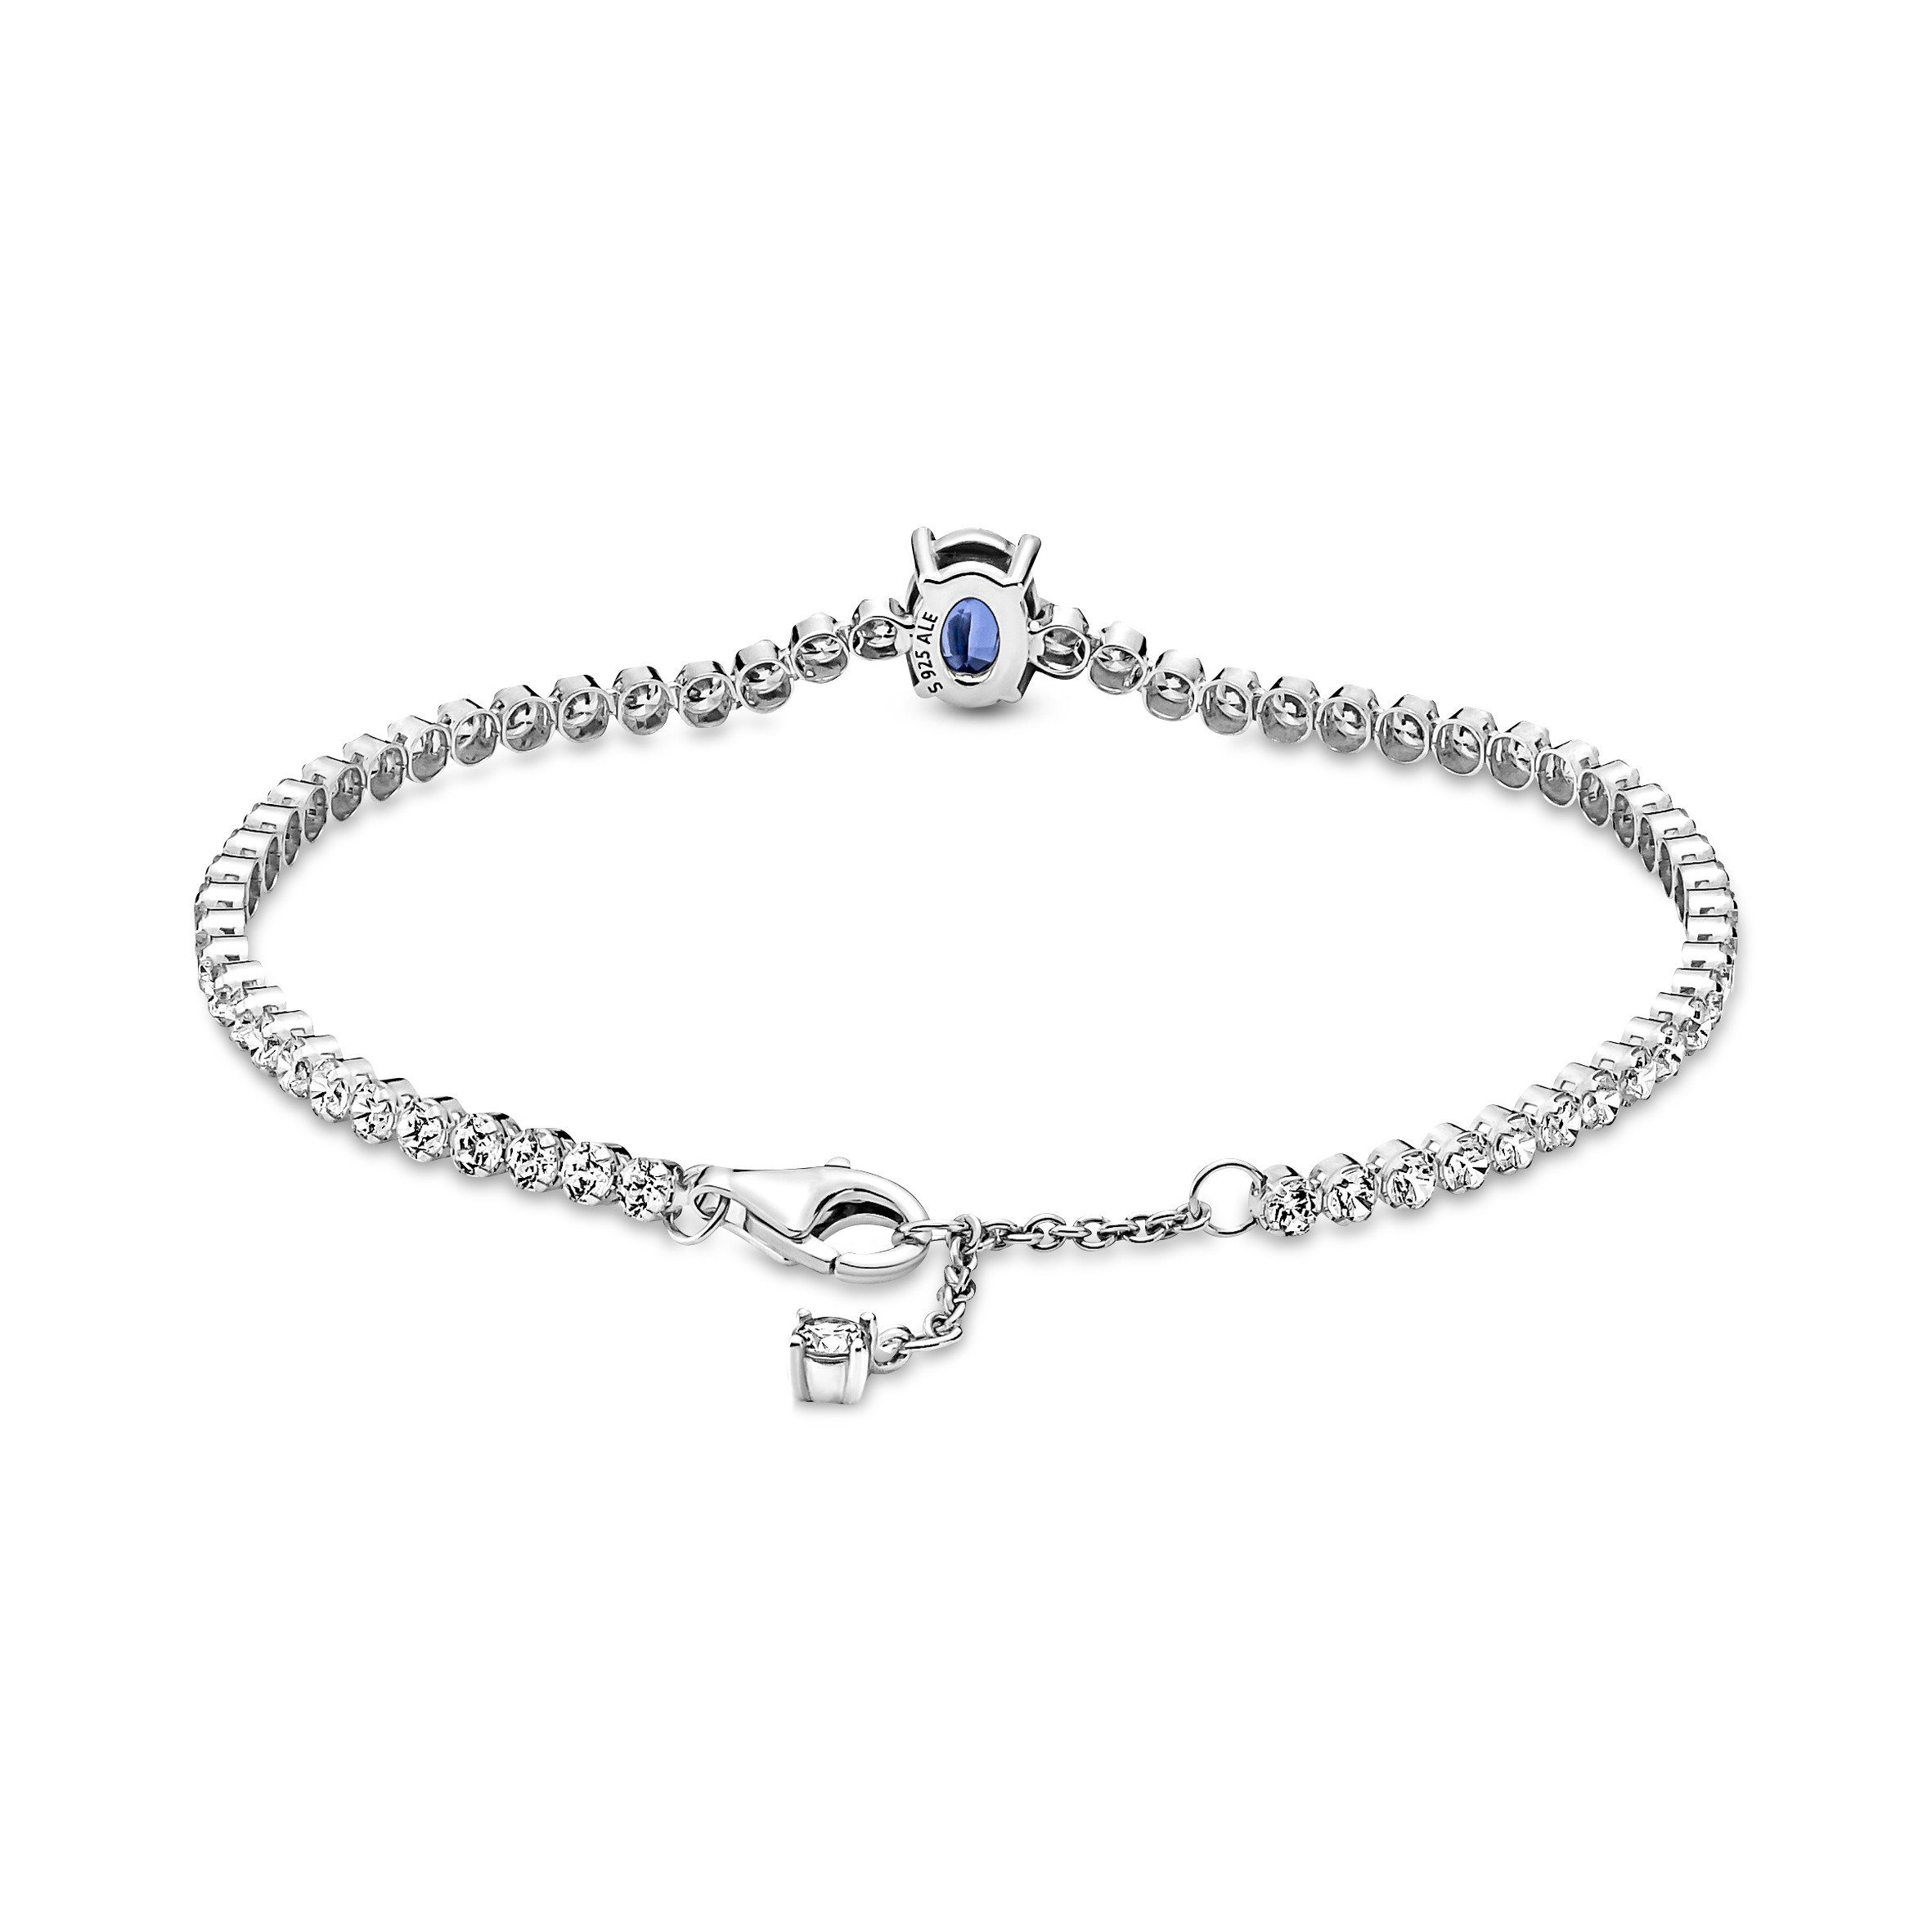 Set Bracelet chrystal Wickelarmband Pandora Tennis silver Sparkling with blue Pavé Sterling